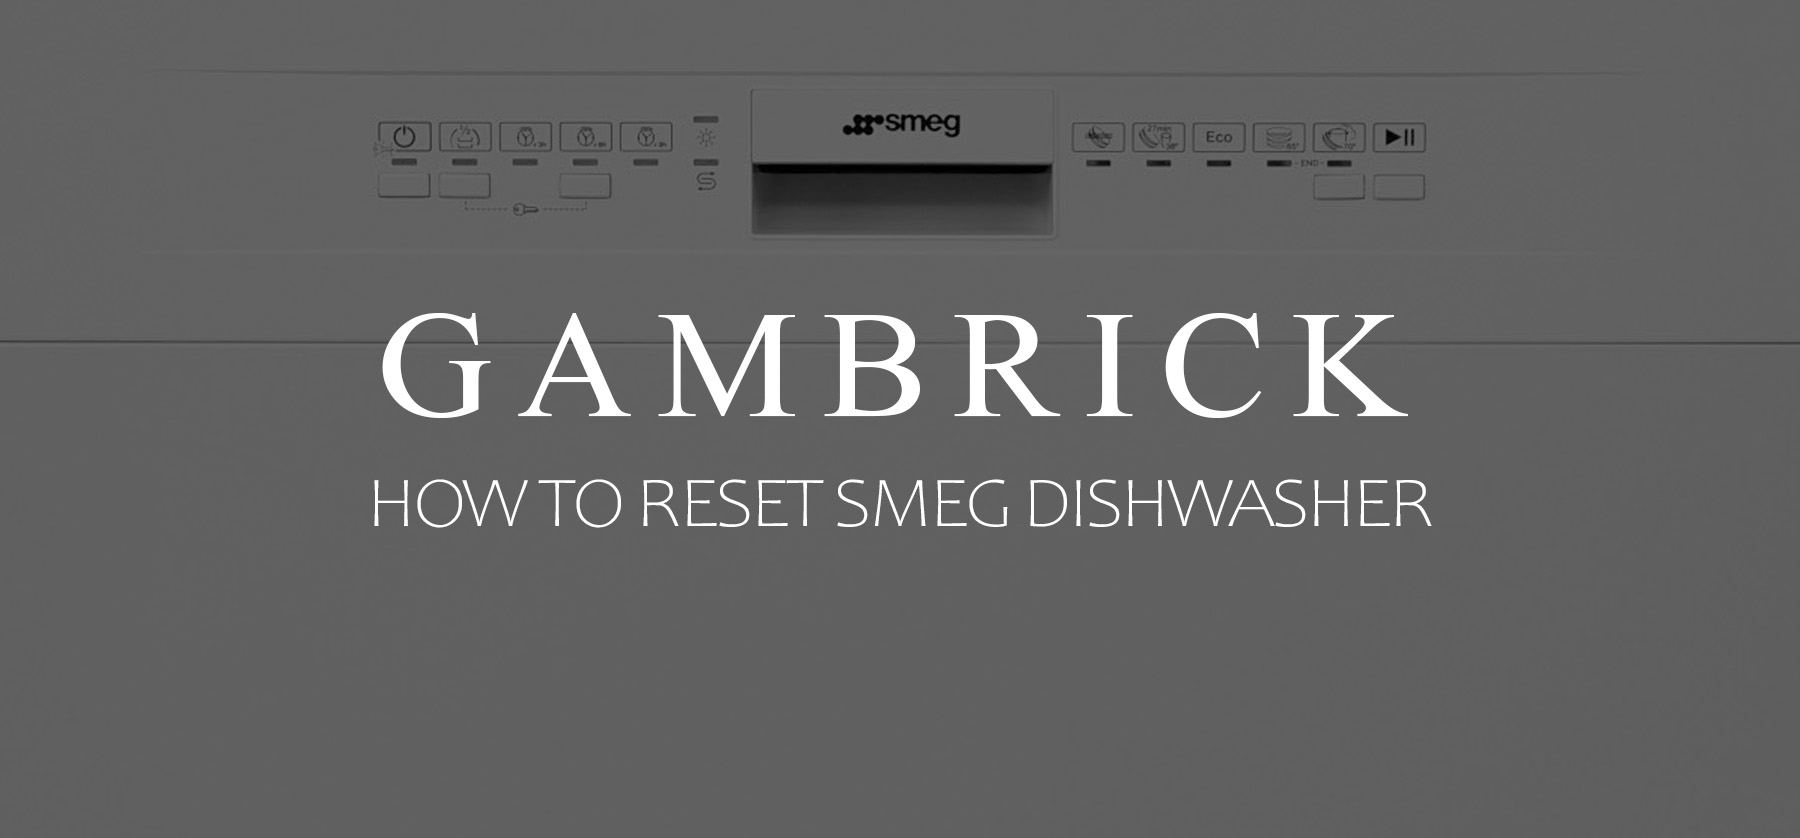 how to reset smeg dishwasher banner 1.0